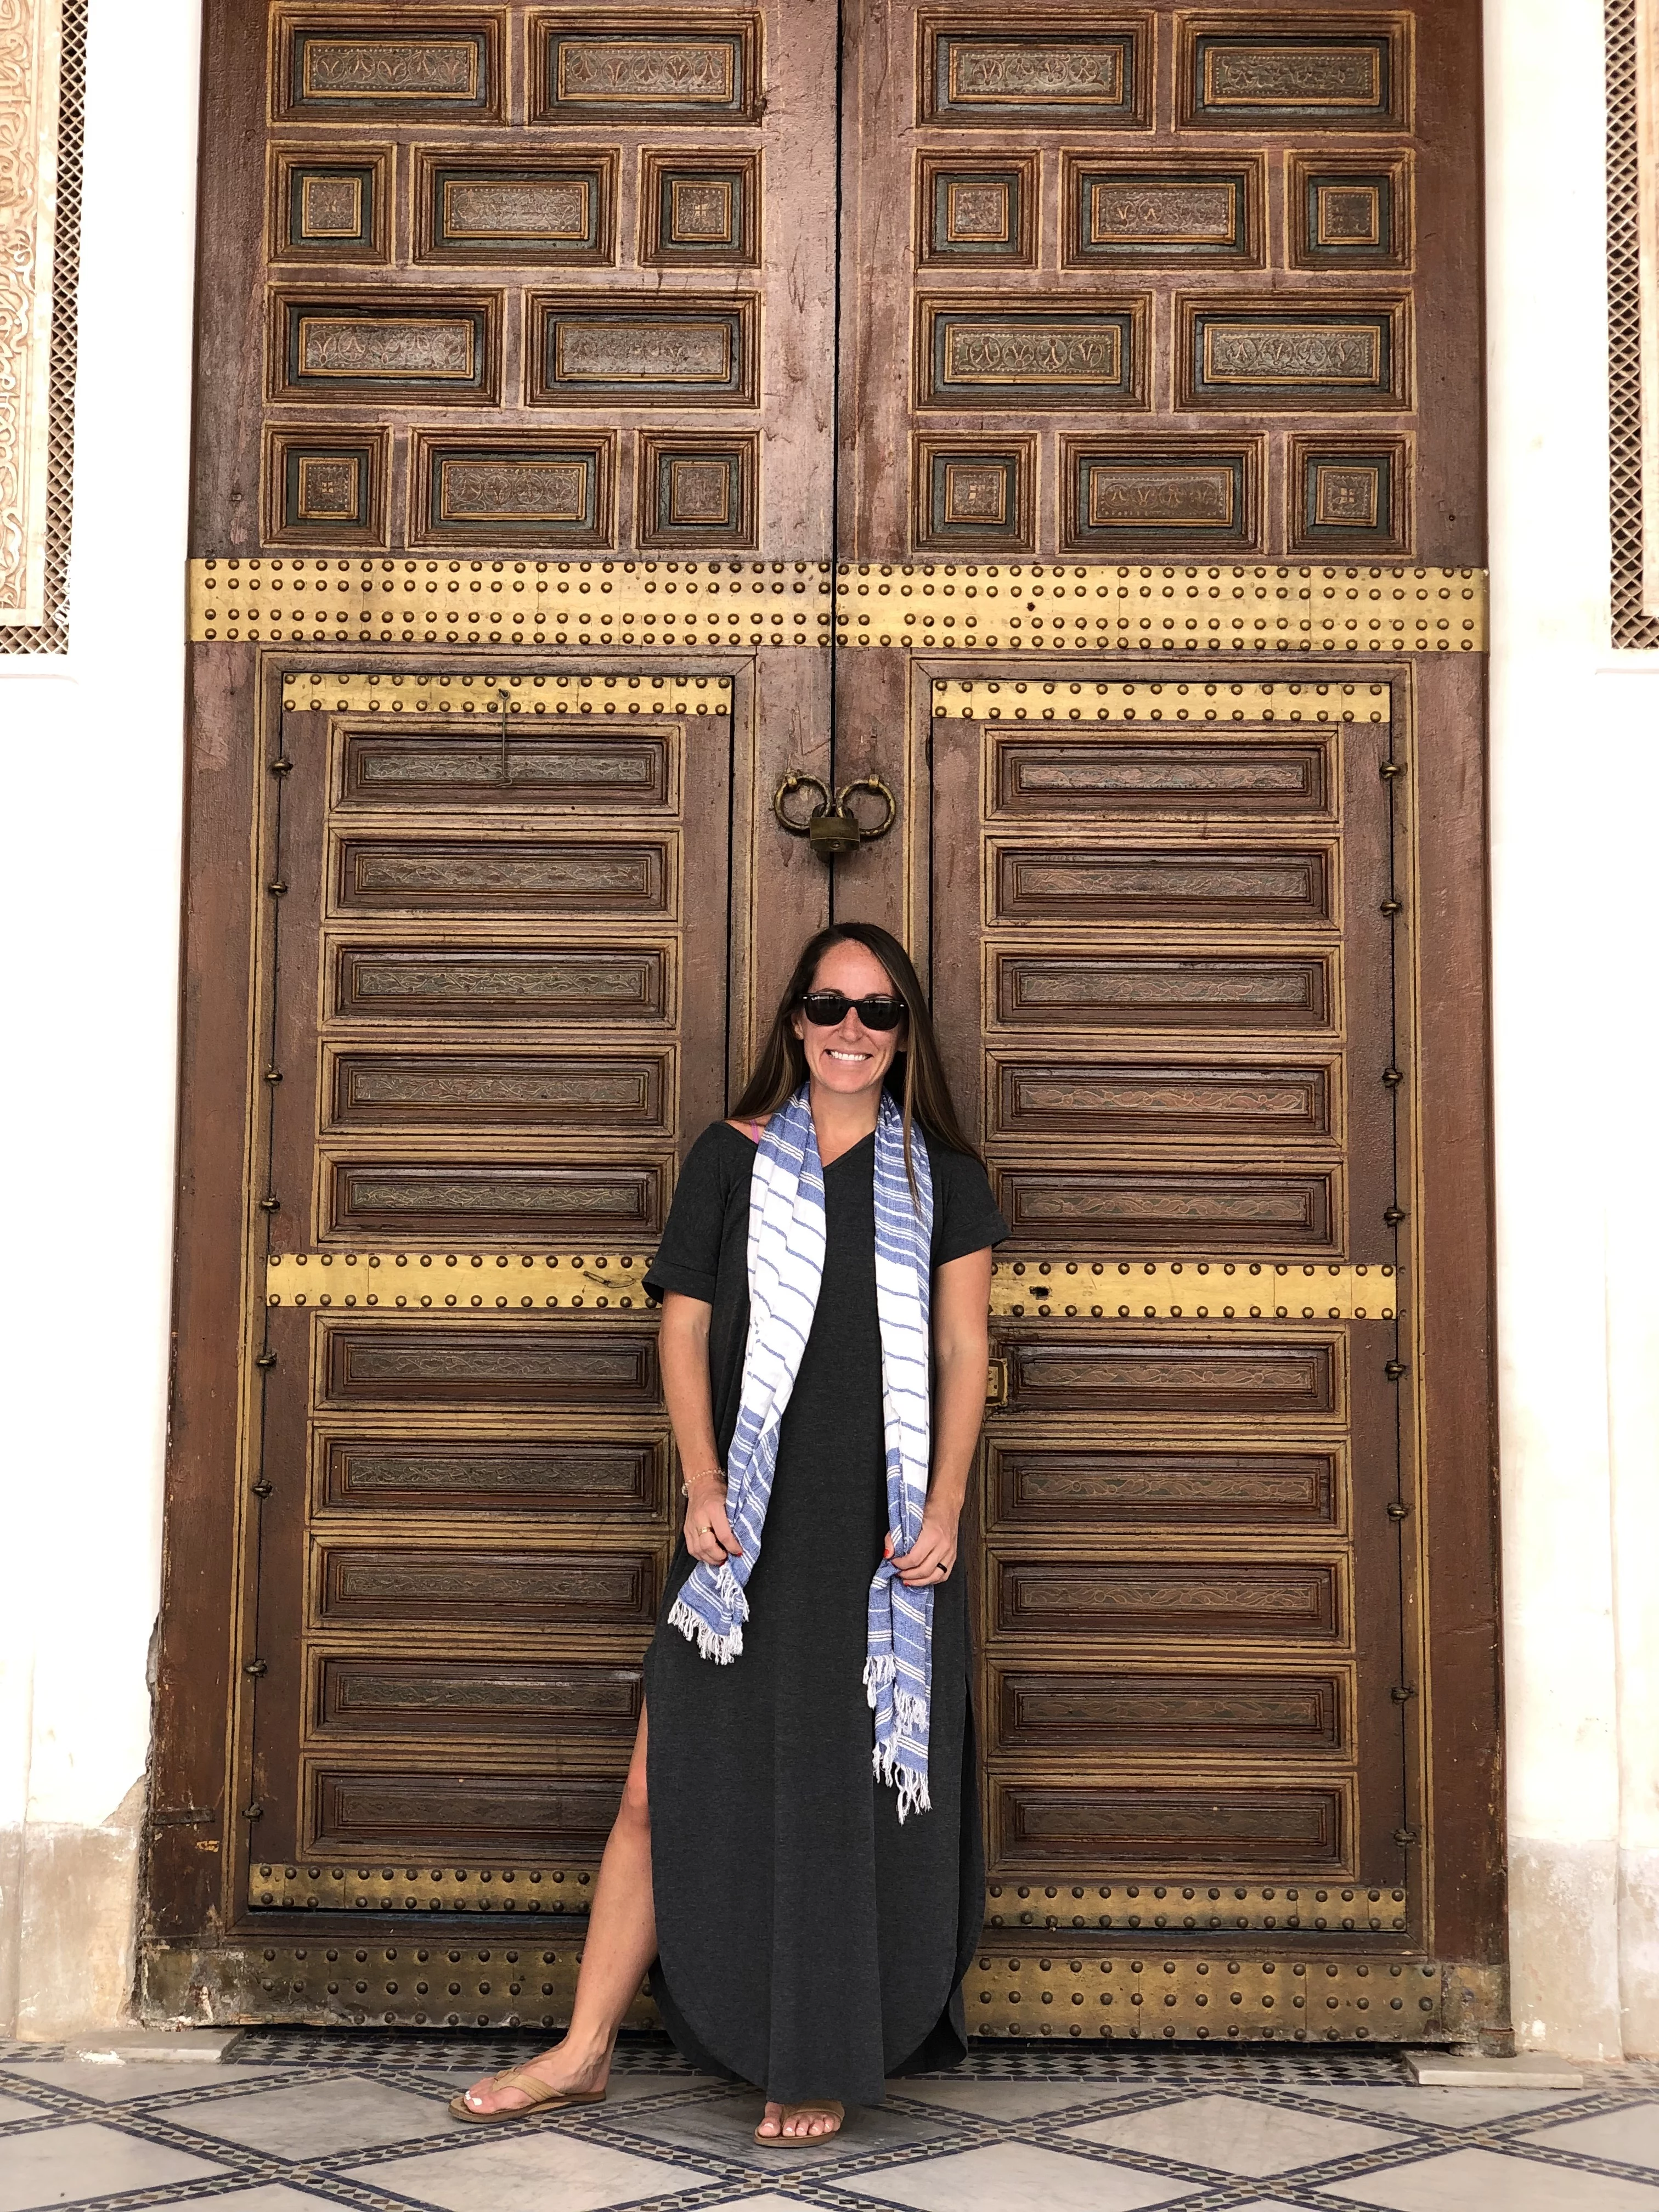 MARRAKECH TRAVEL GUIDE + TIPS | Majorelle Gardens - Marrakech Travel Guide - Marrakech Travel - Marrakech Morocco - Shopping In Marrakech - What To See In Marrakech - What To Do In Marrakech - Marrakech Travel Blog - Marrakech Hotels - Marrakech Weather - Marrakesh - Morocco Travel Blog - Bahia Palace - #morocco #travel #marrakech 